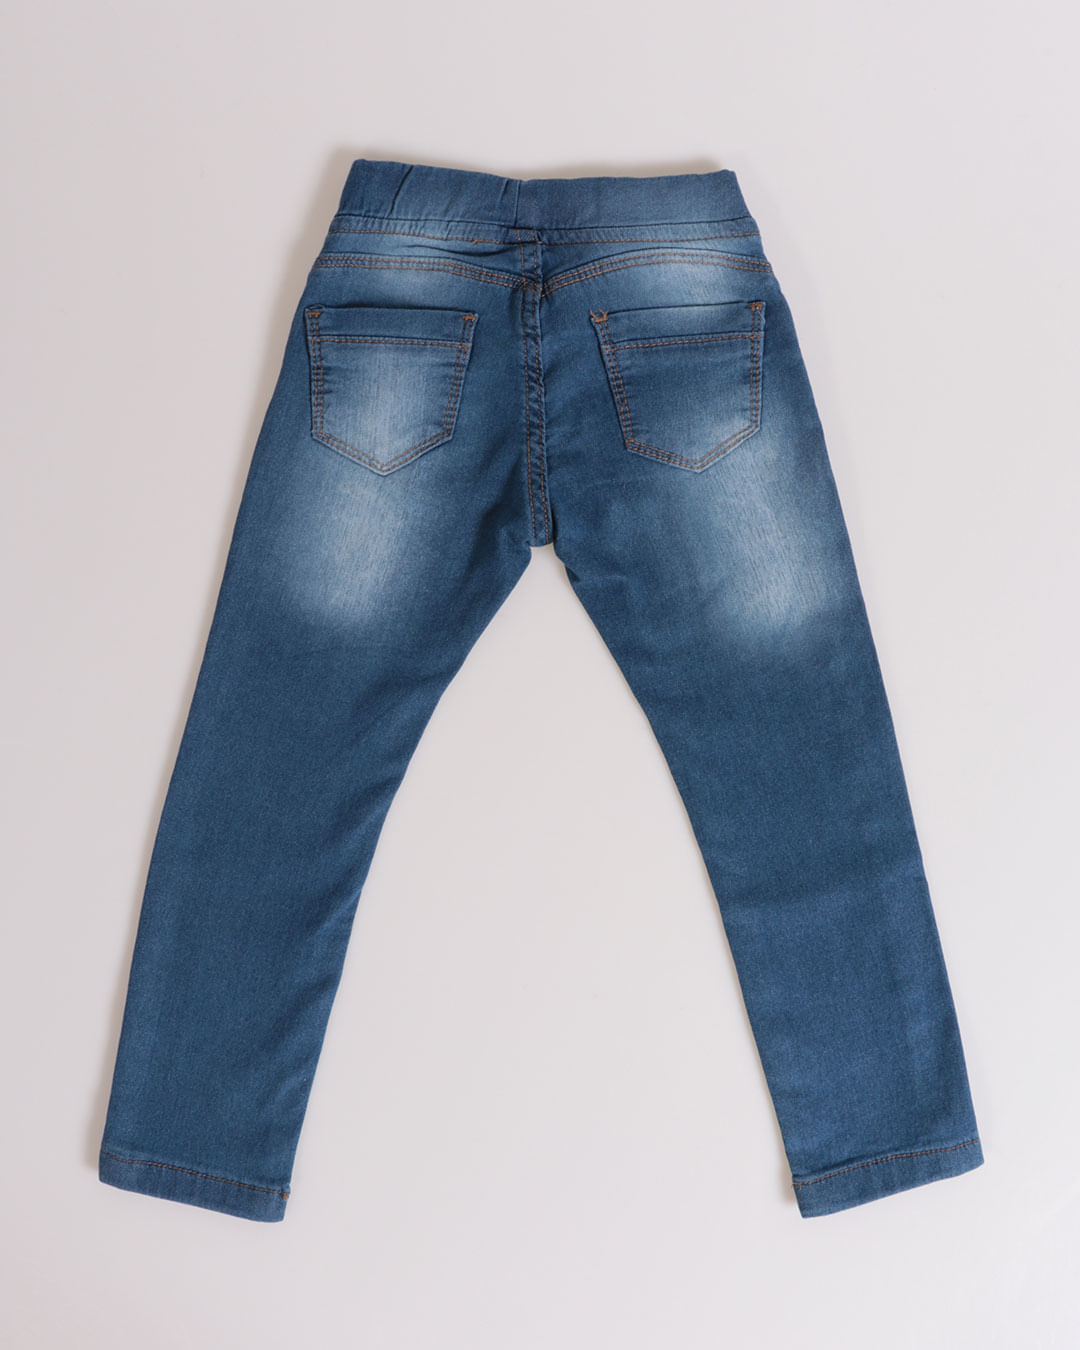 Calca-Cos-1102200-F-13-Lc---Blue-Jeans-Claro